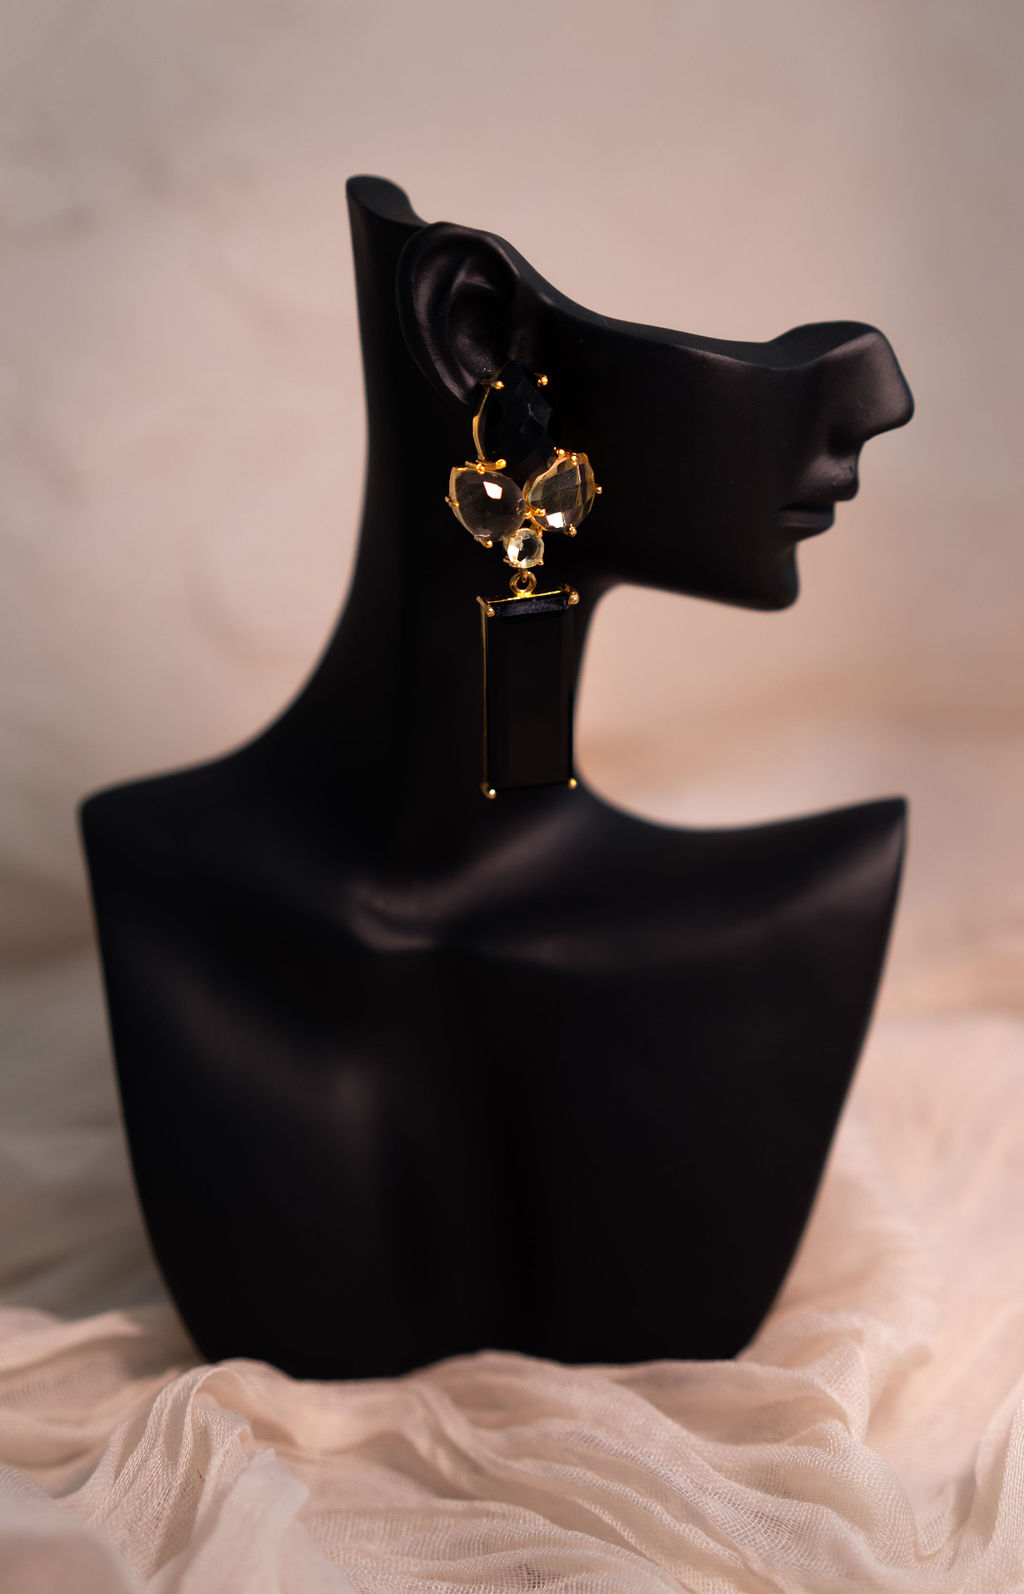 Erin Black Onyx Multi Gemstone Earrings